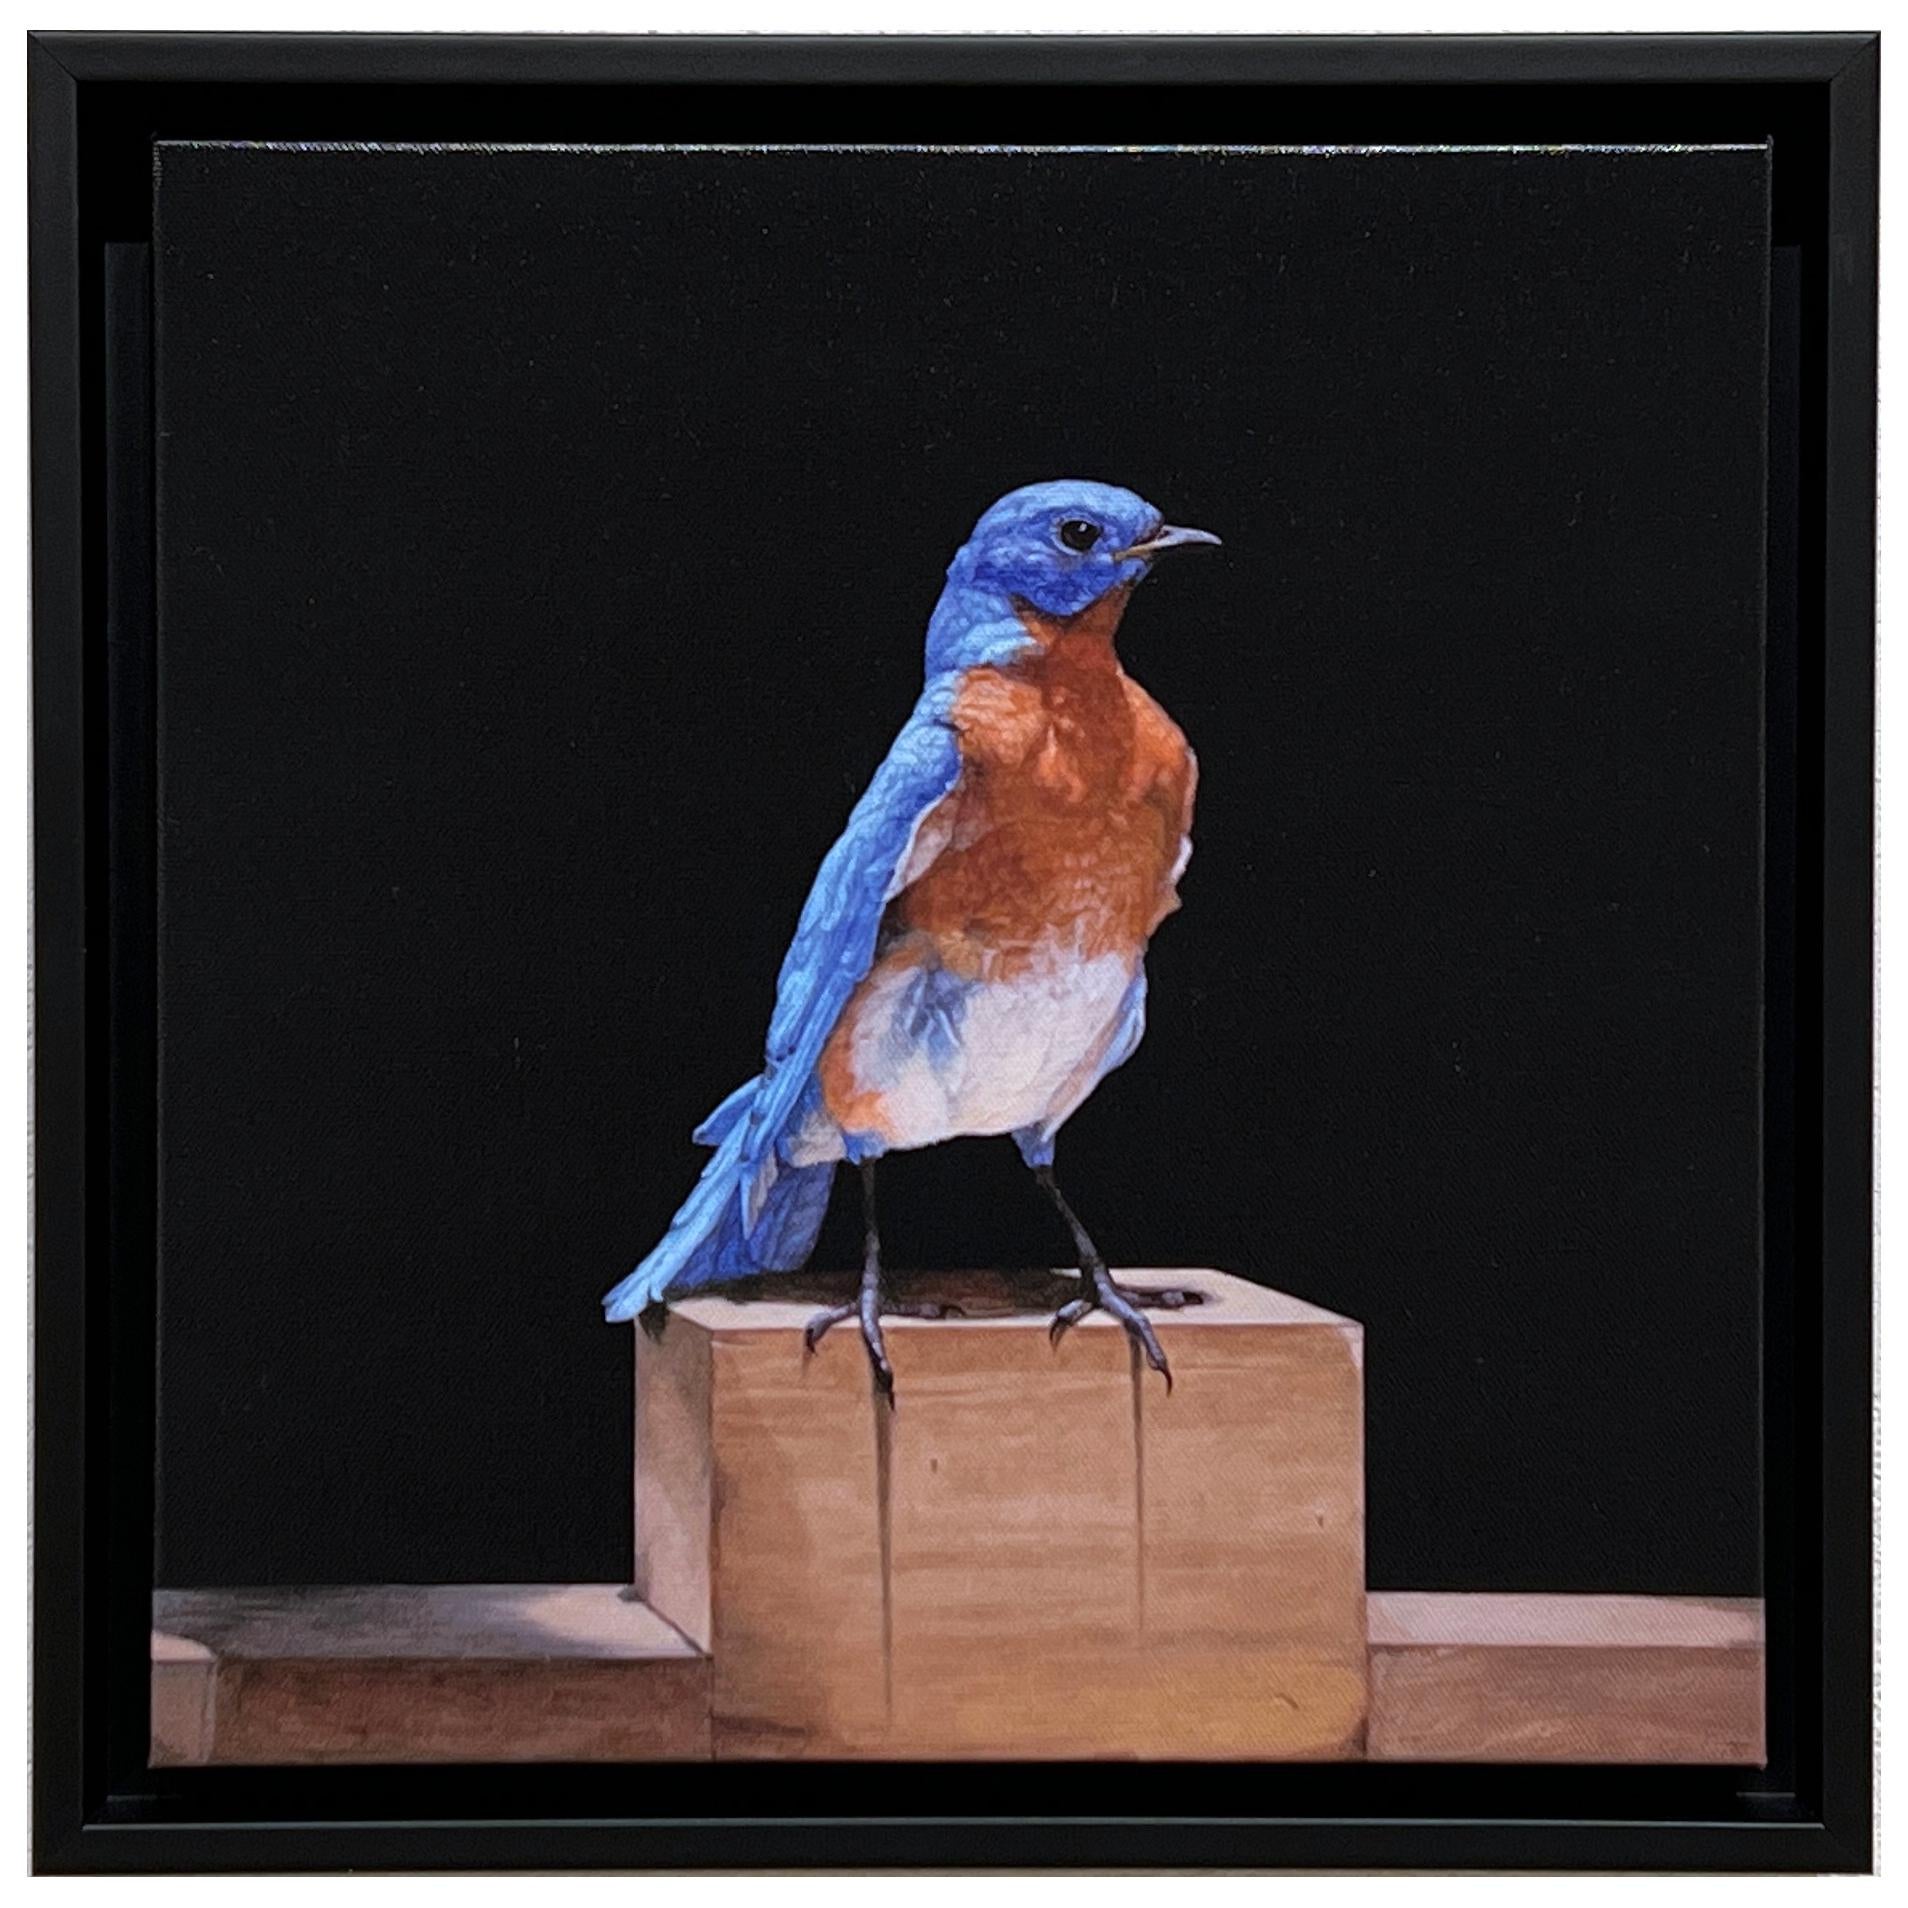 EASTERN BLUE BIRD - Contemporain / Photorealism / animal print